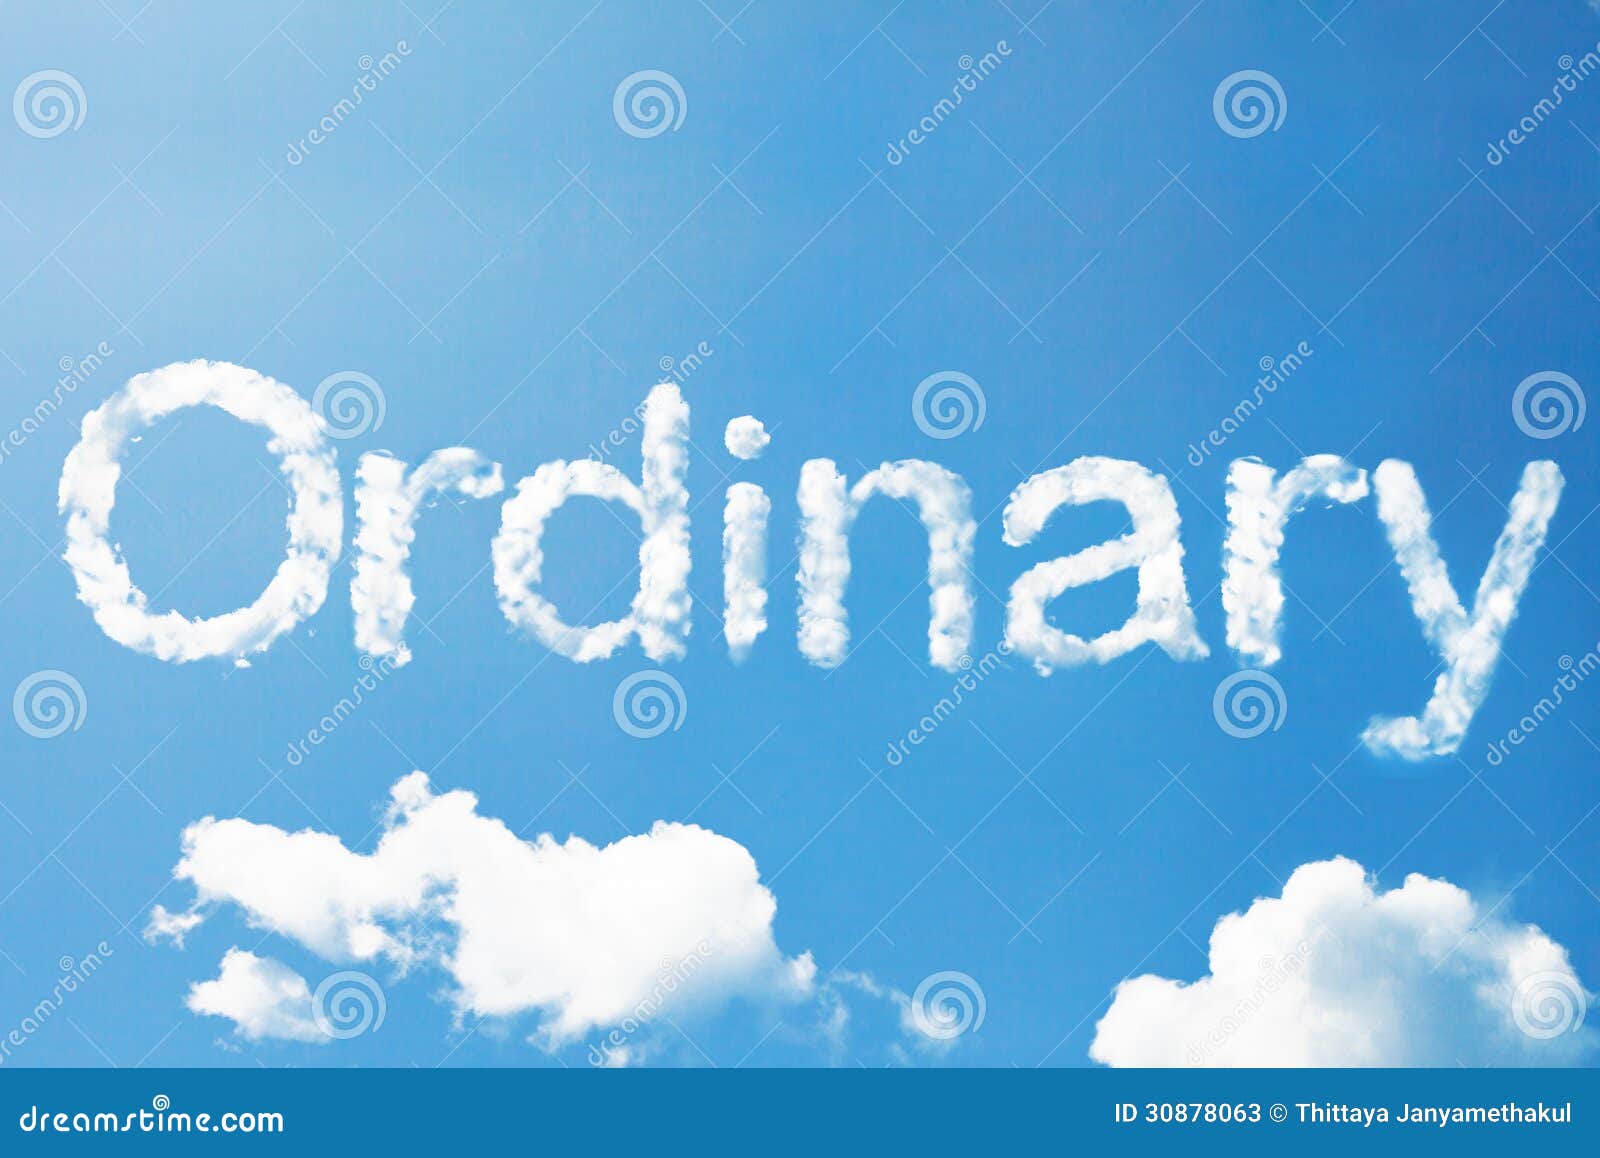 ordinary cloud word